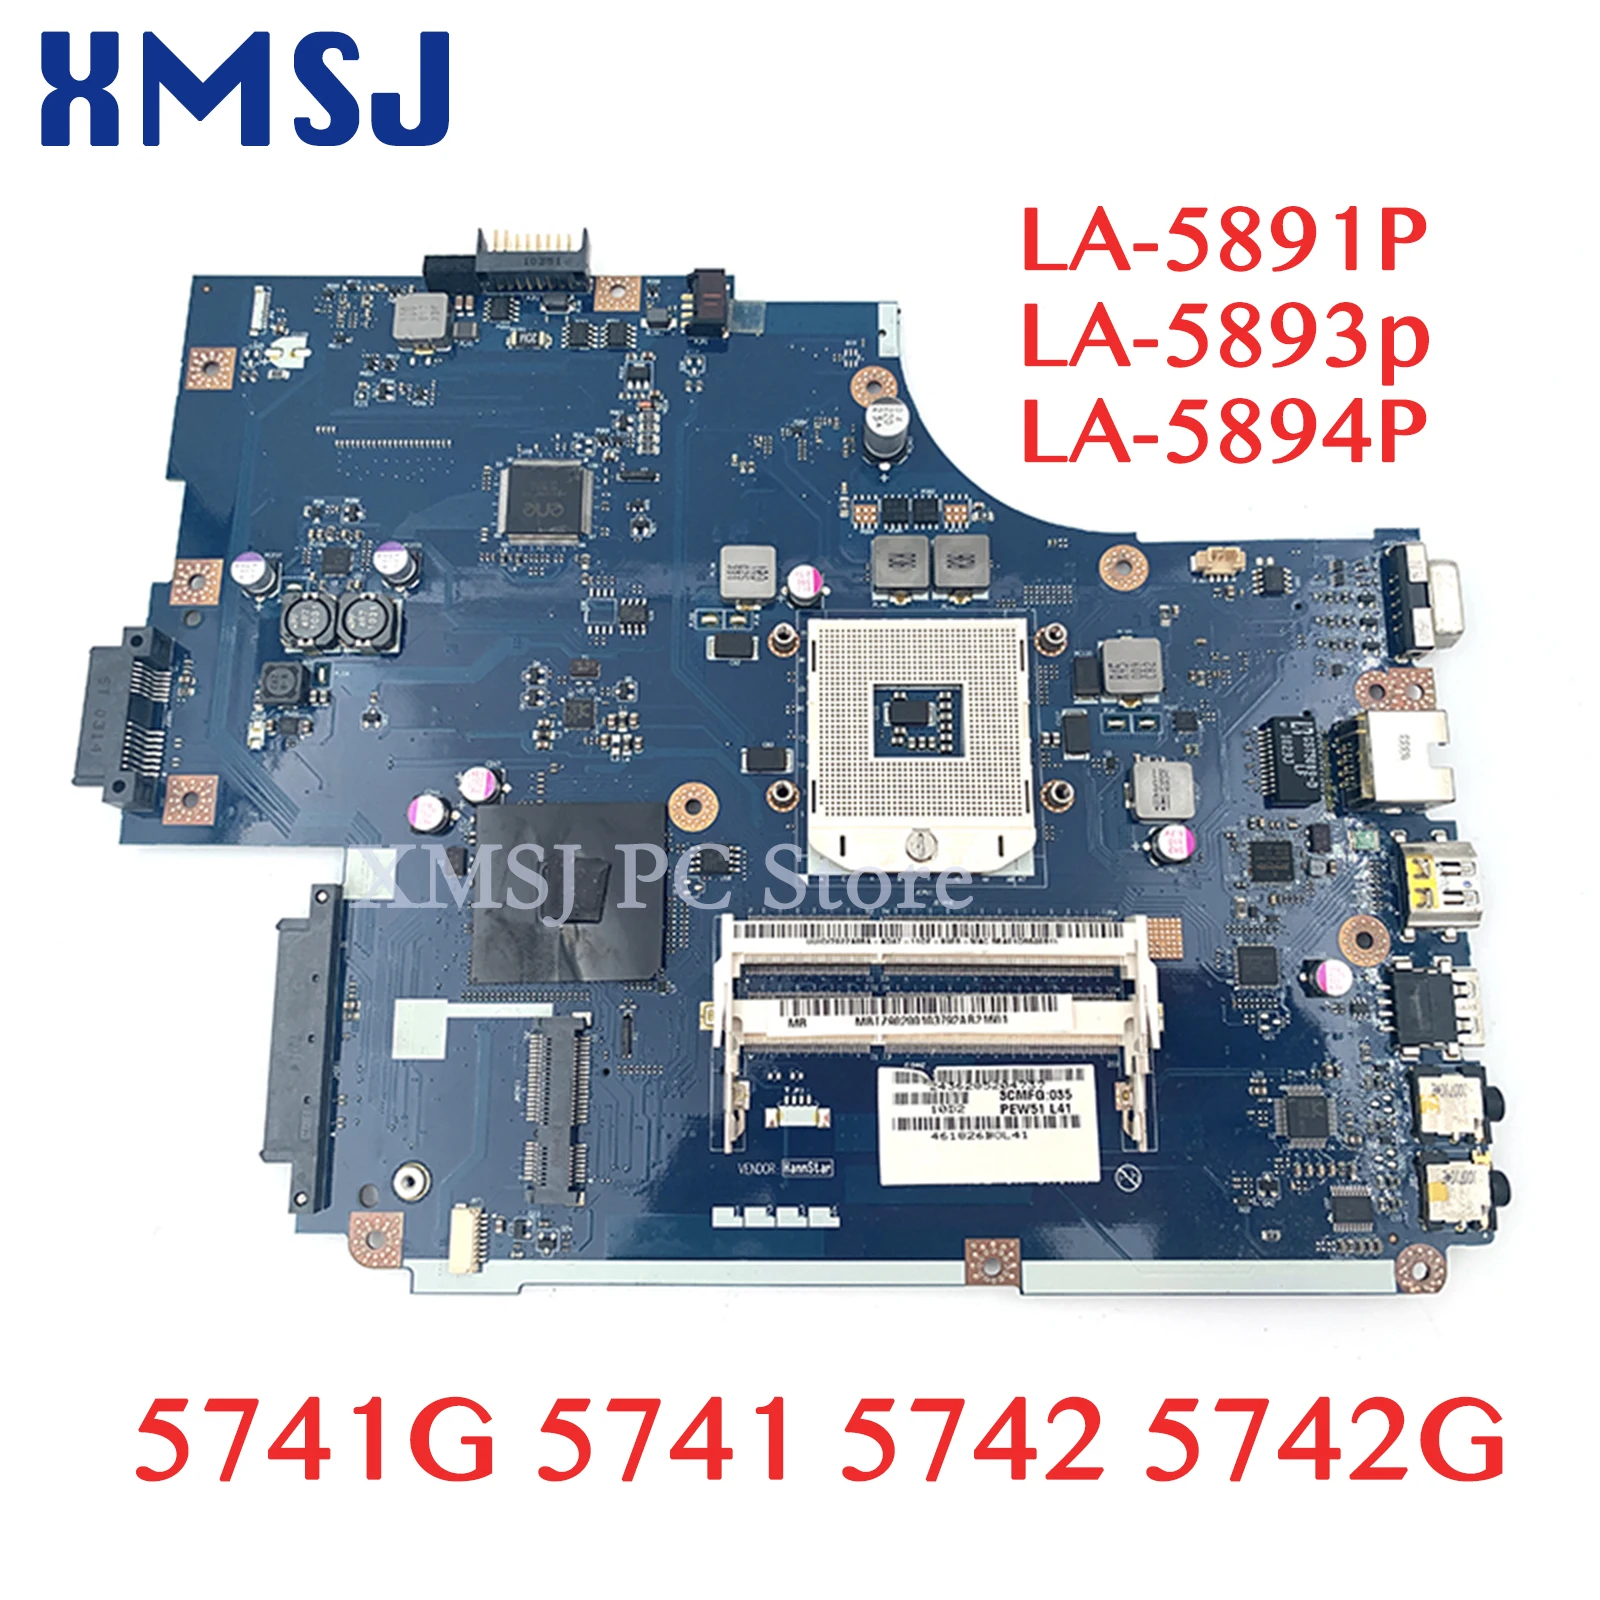 

XMSJ NEW70 LA-5892P For XMSJ Acer Aspire 5741G 5741 5742 5742G Motherboard + Heatsink Cooler Fit For LA-5891P LA-5893p LA-5894P